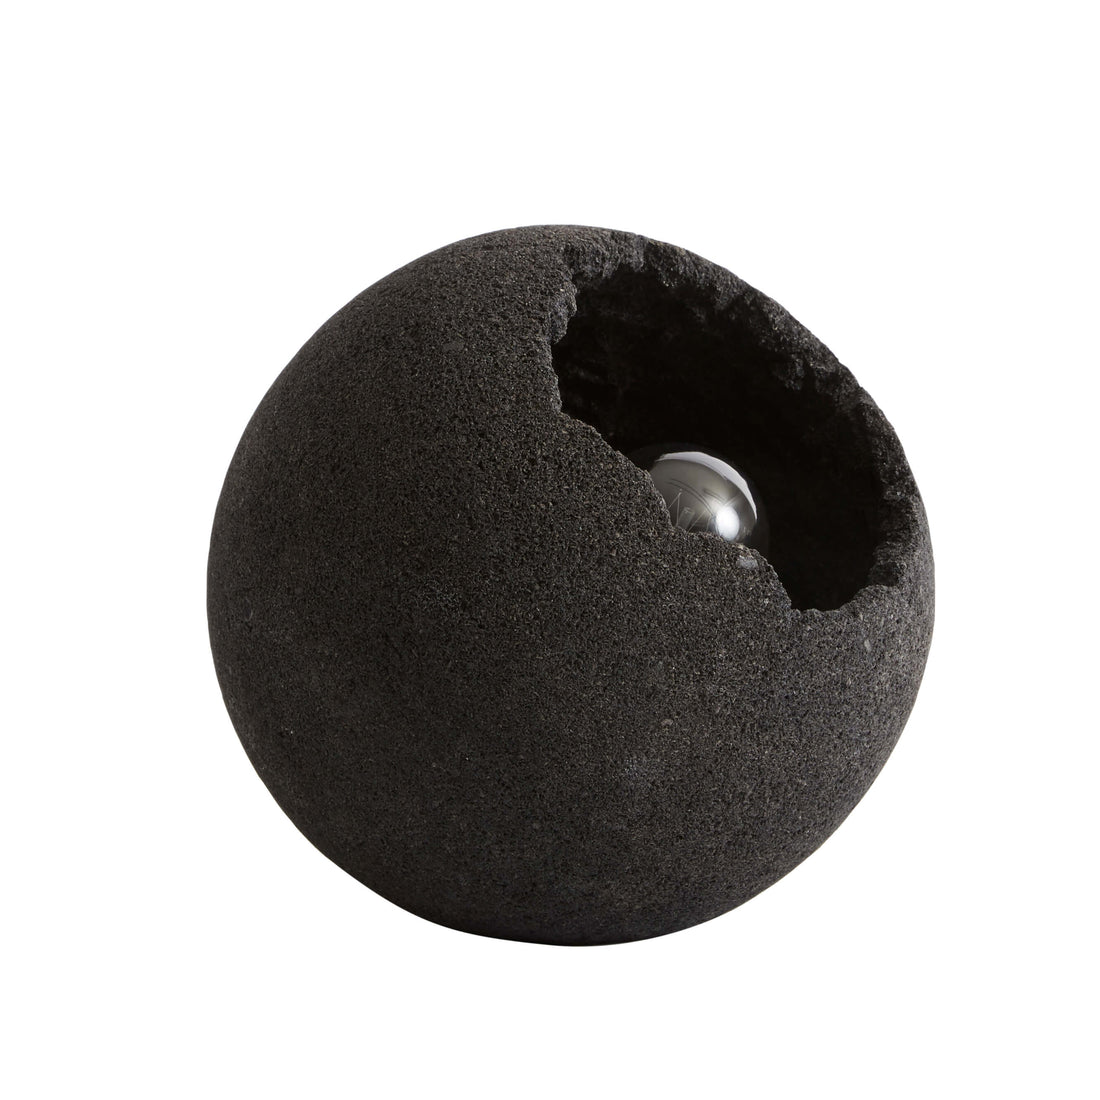 Muubs - Floor lamp Crust - Mat Black Lava Stone - Ø22XH21 cm